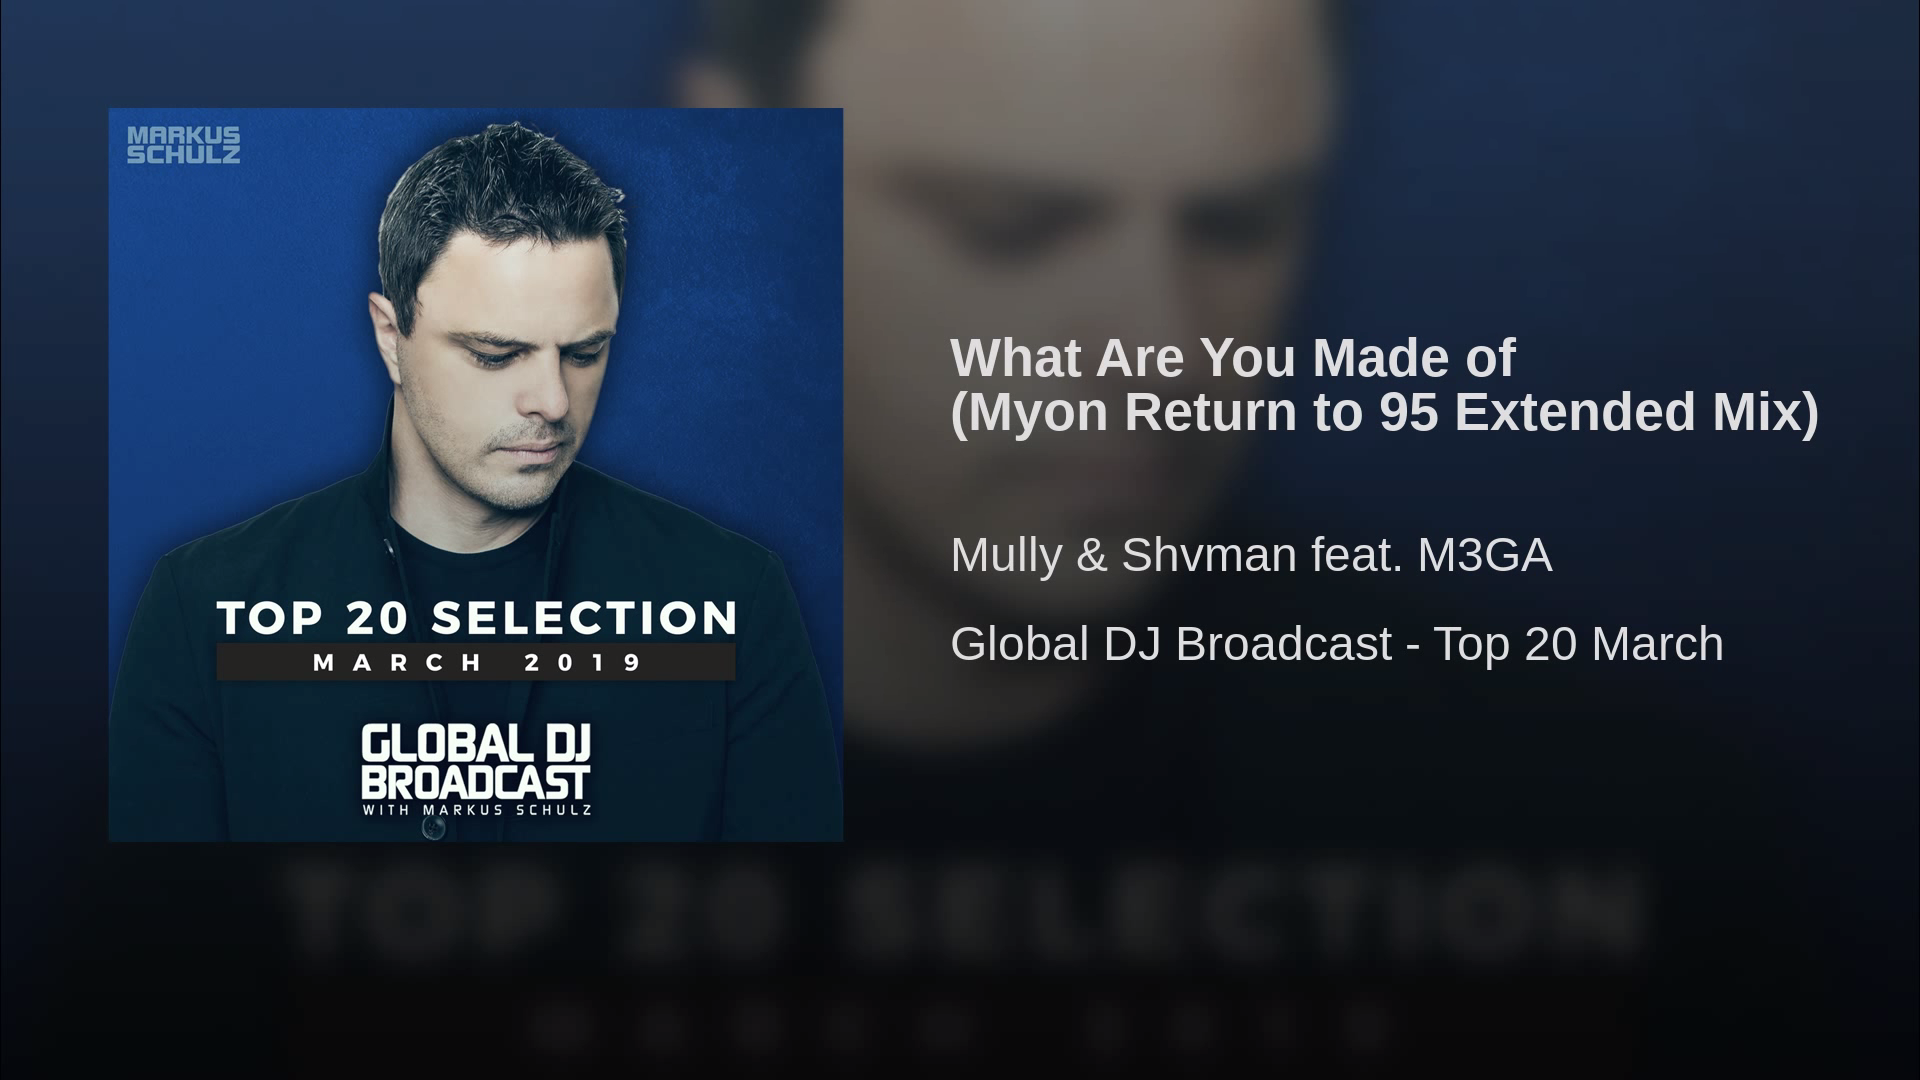 Markus Schulz - Global DJ Broadcast Top 20.png